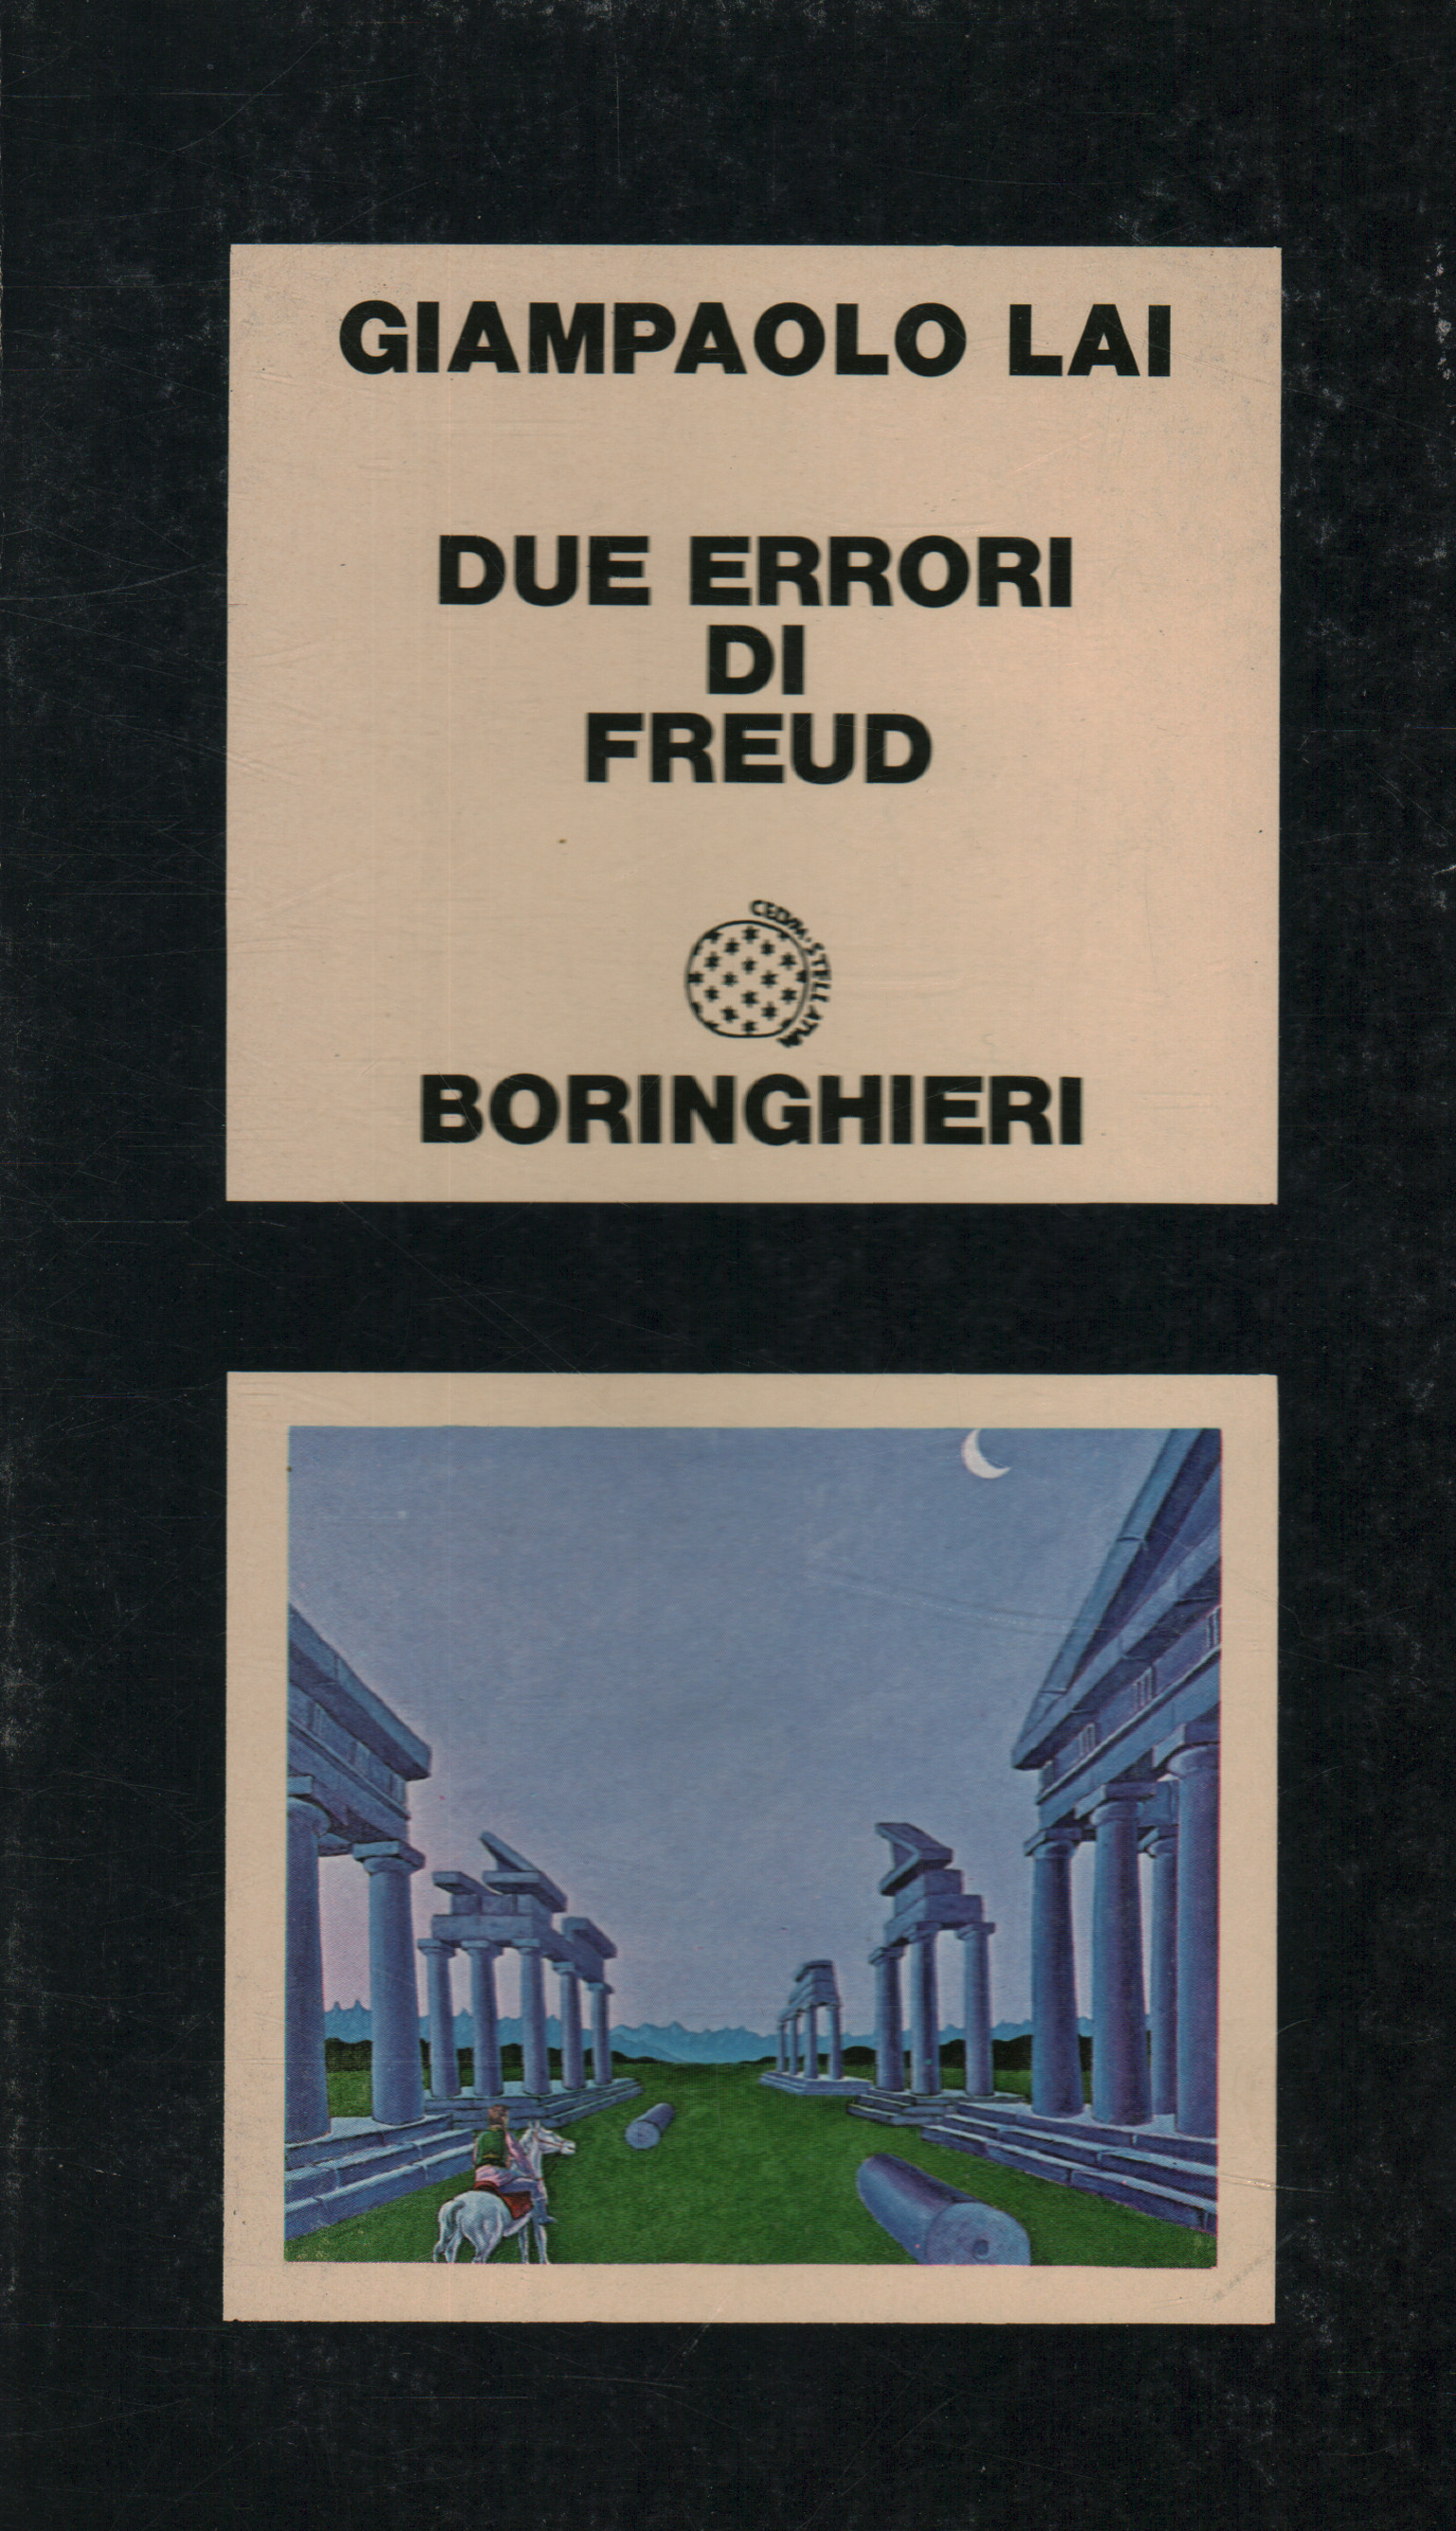 Two errors of Freud